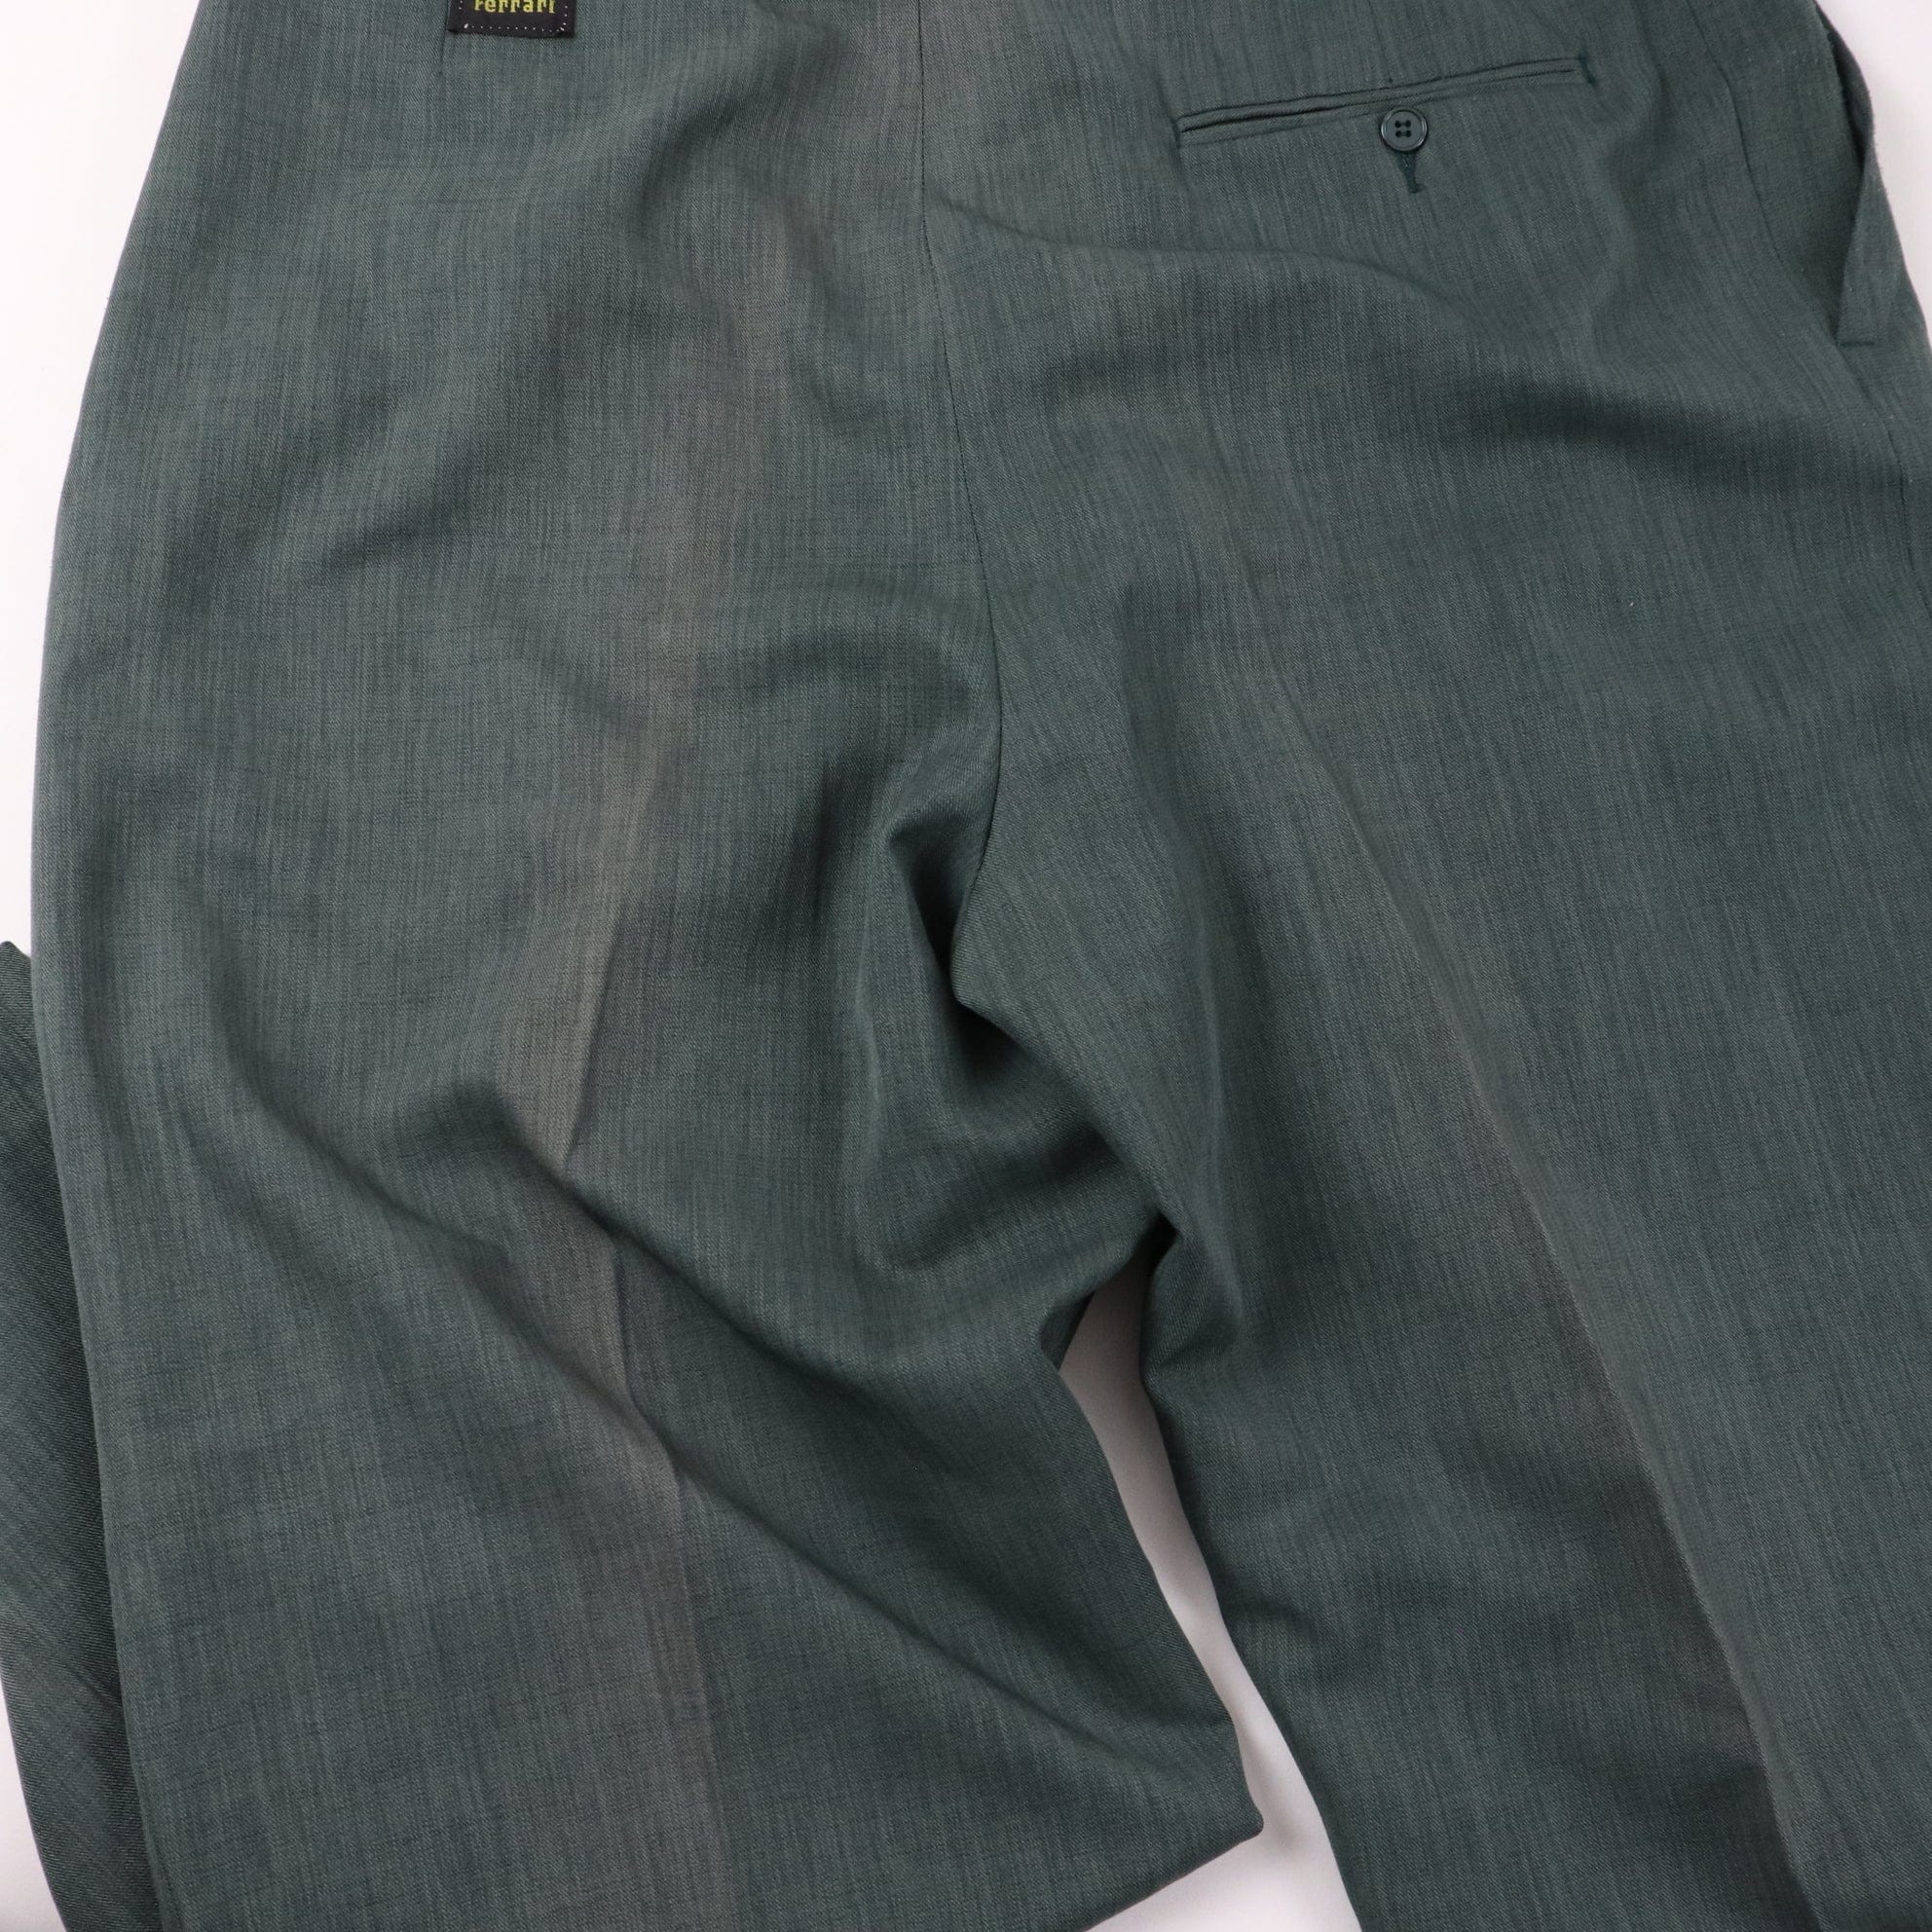 other pants vintage ferrari trouser pants size 36 x 30 30488081760315